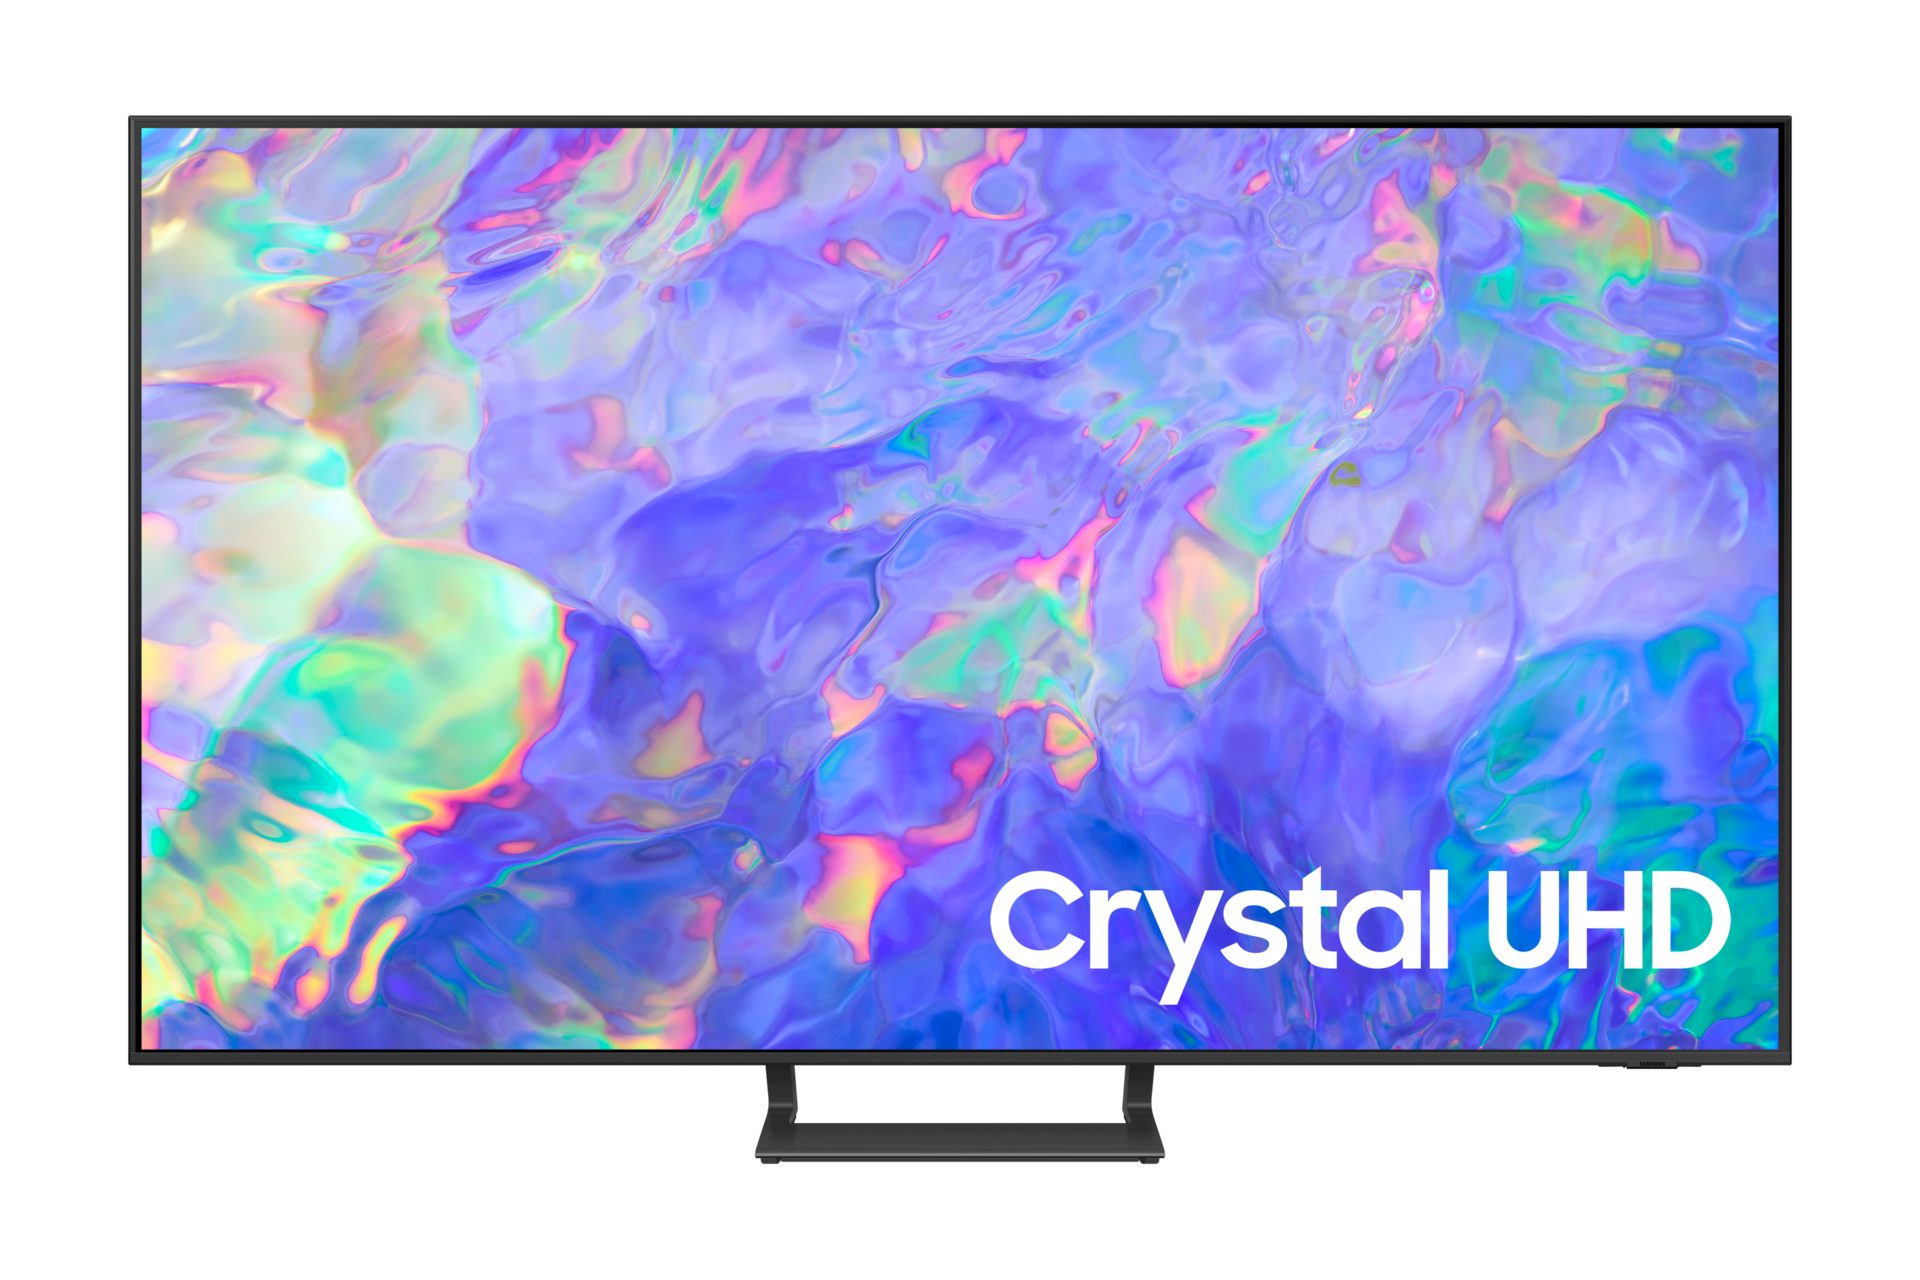 UA85BU8000UXMV - Téléviseur Samsung BU8000 4K Crystal UHD 